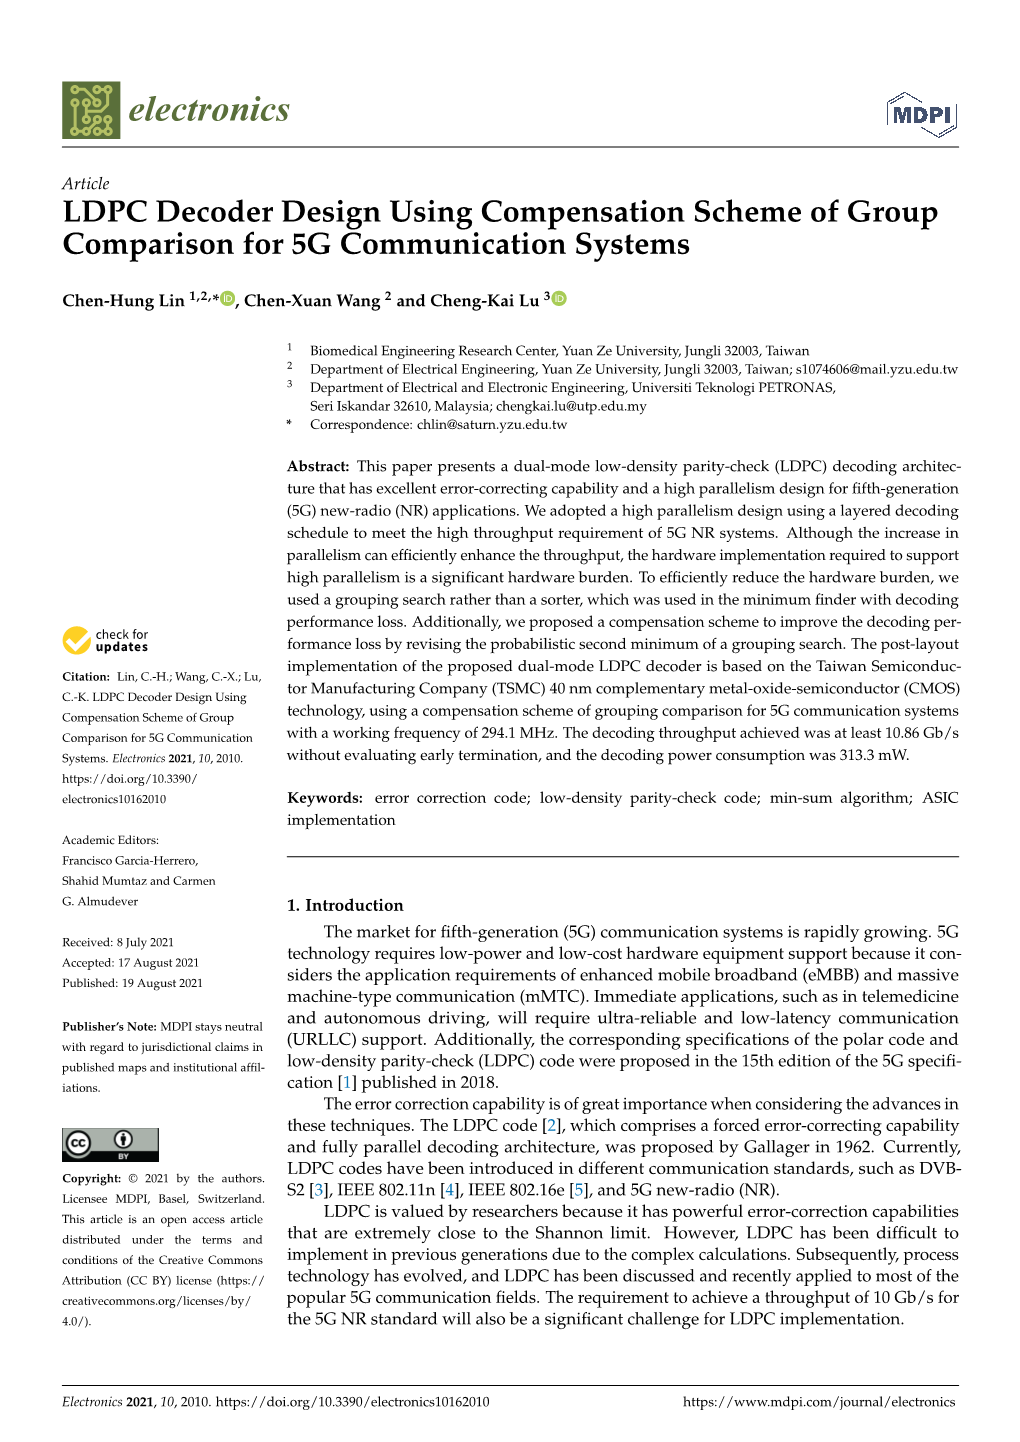 LDPC Decoder Design Using Compensation Scheme of Group Comparison for 5G Communication Systems